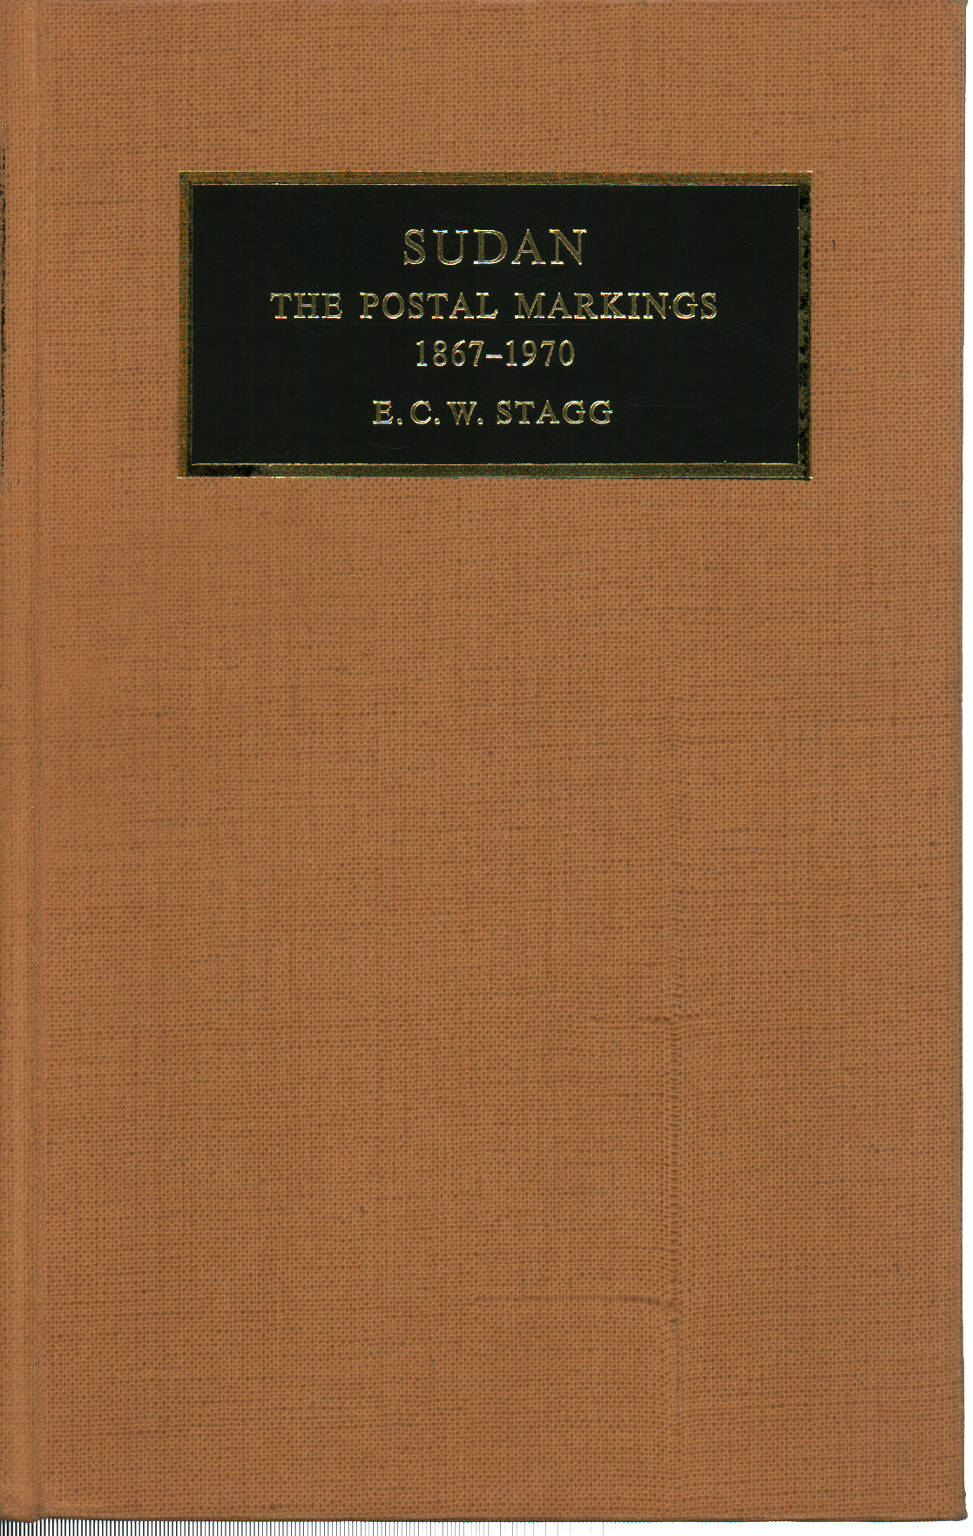 Sudan the postal markings 1867 - 1970, E. C. W. Stagg